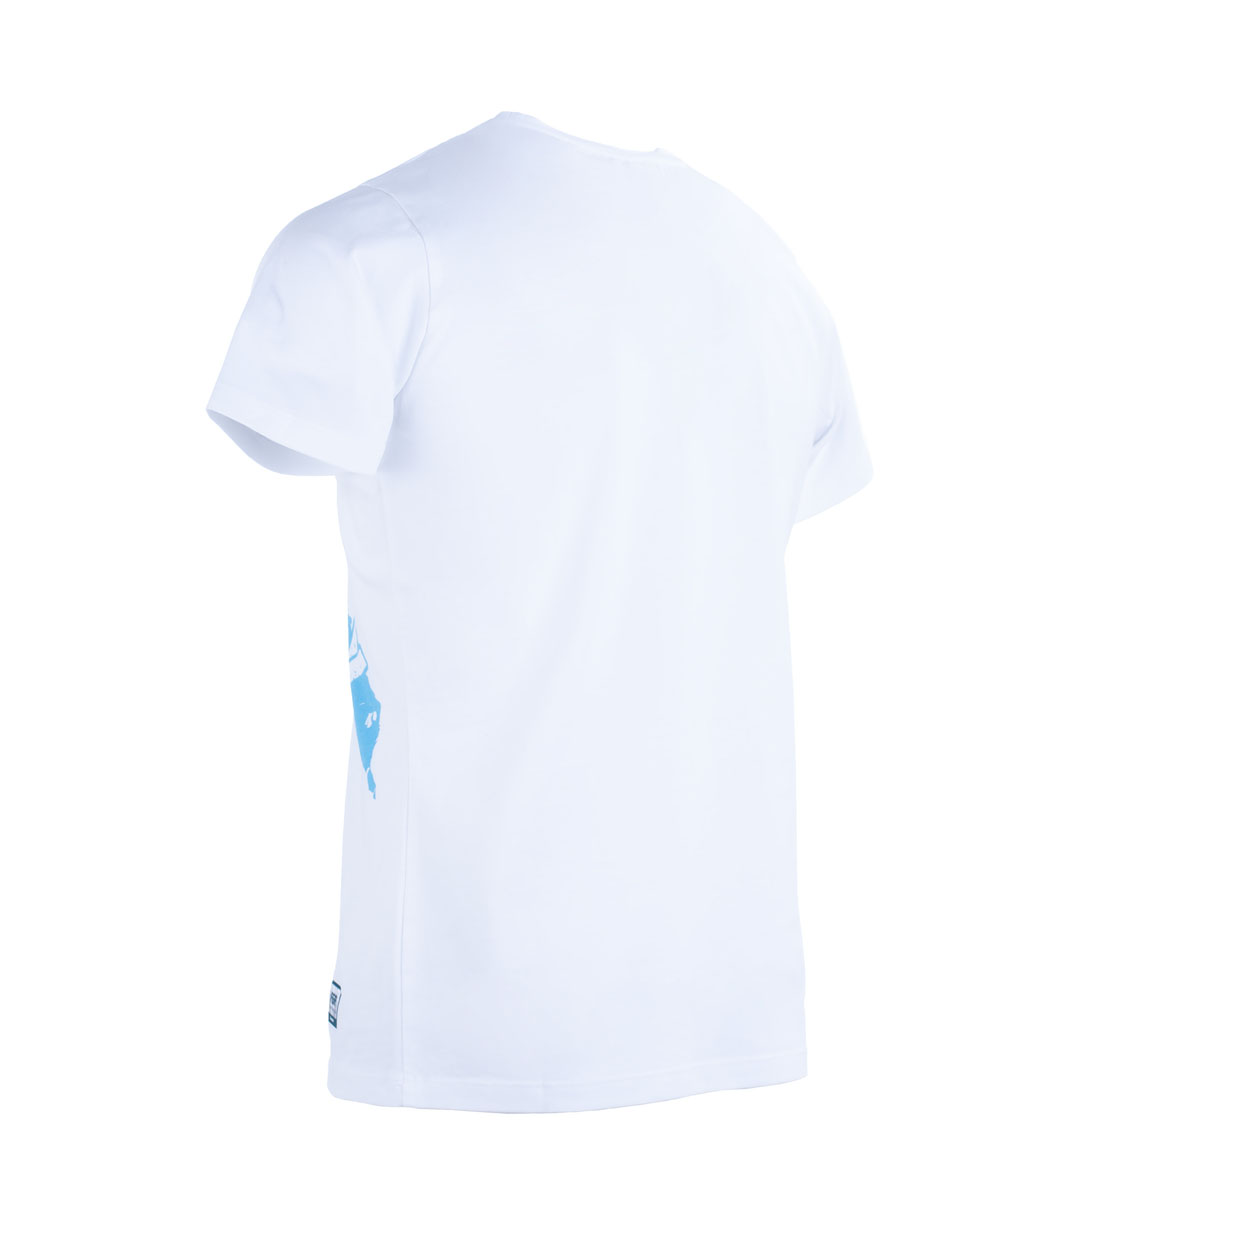 Camiseta Algodón Selección Gallega de Rugby - Blanca